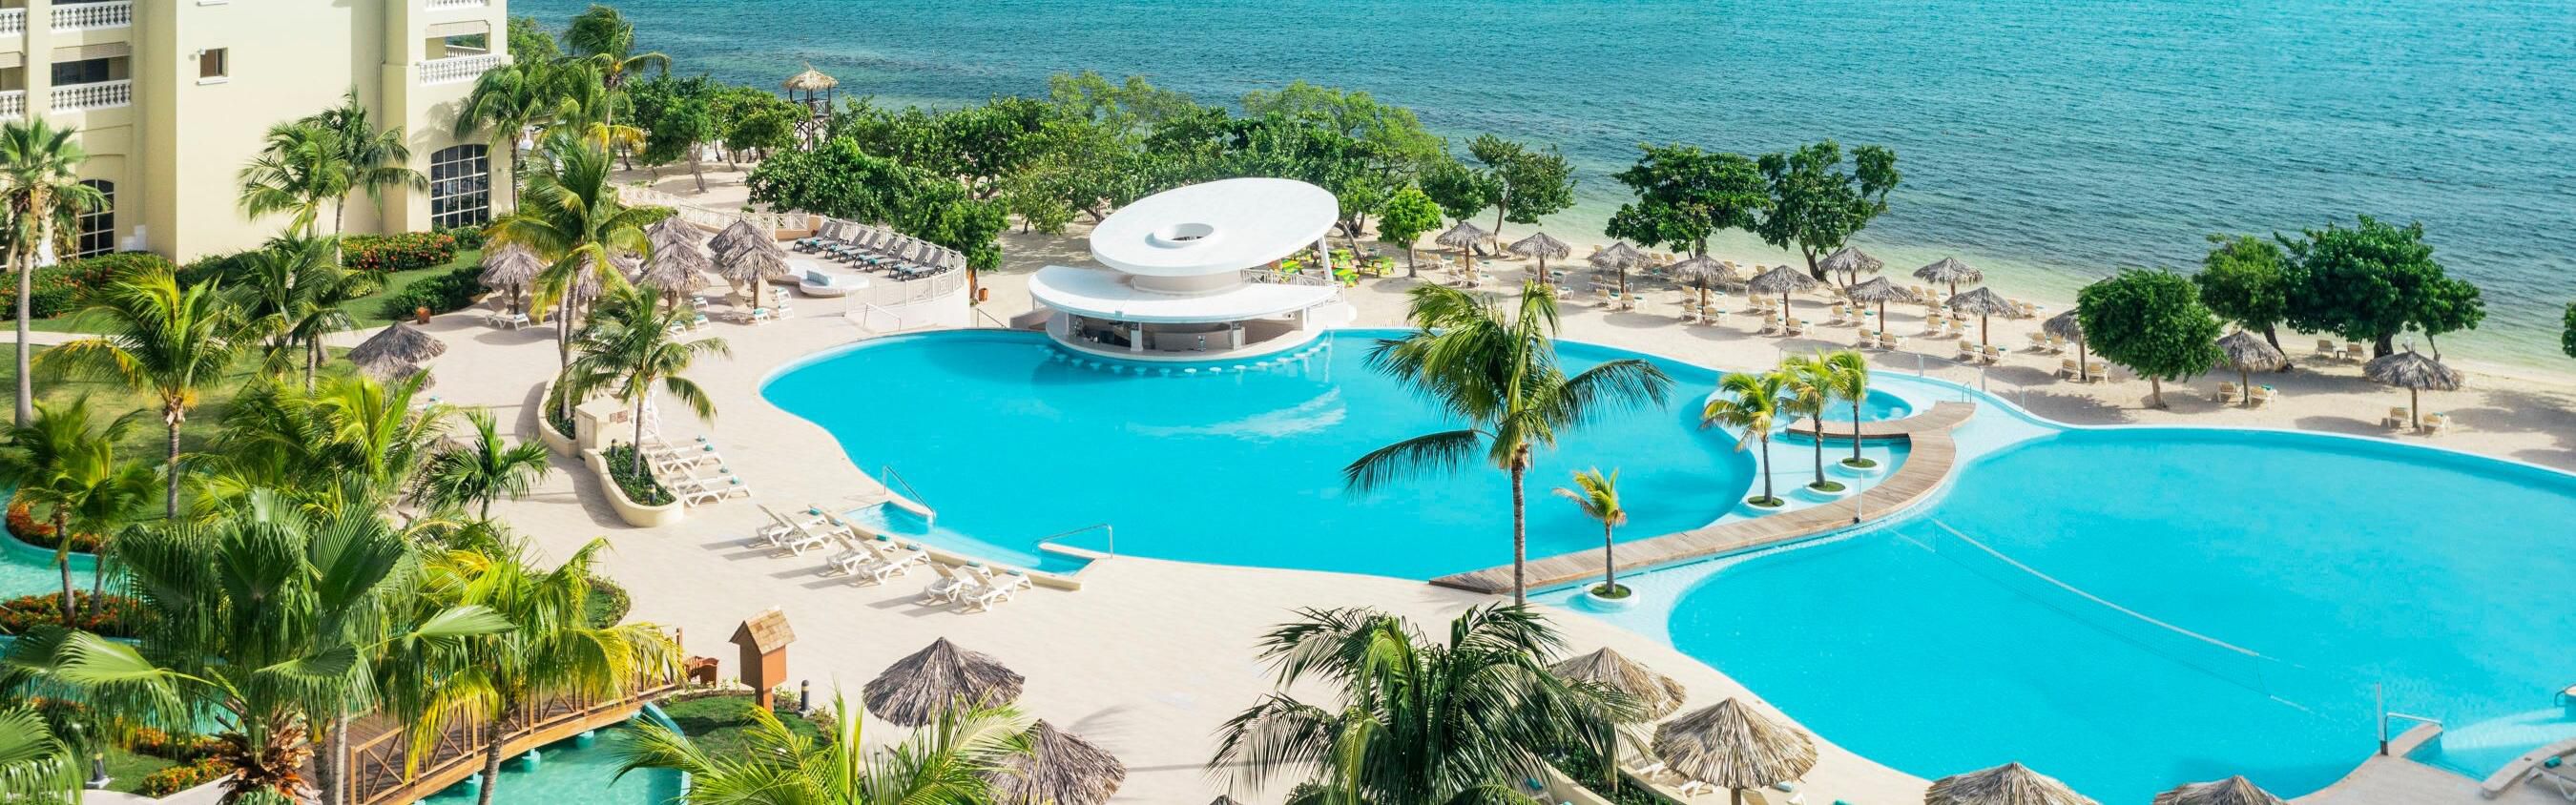 Explore IHG Jamaica All-Inclusive Resorts